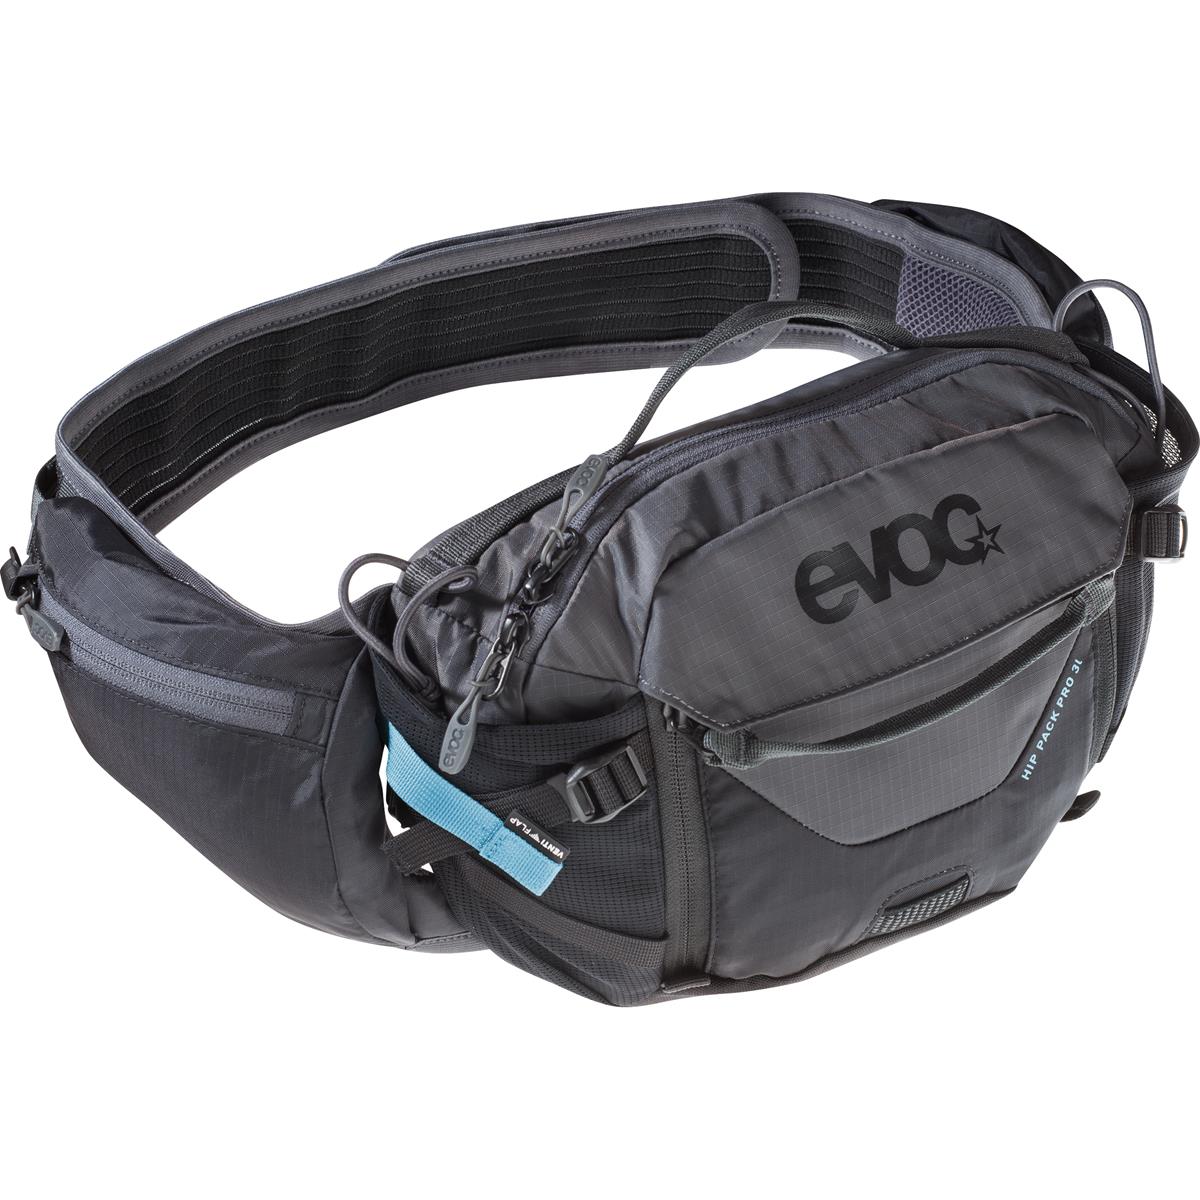 Evoc Hüfttasche mit Trinksystem inkl. 1.5L Blase Hip Pack Pro 3L Black/Carbon Gray